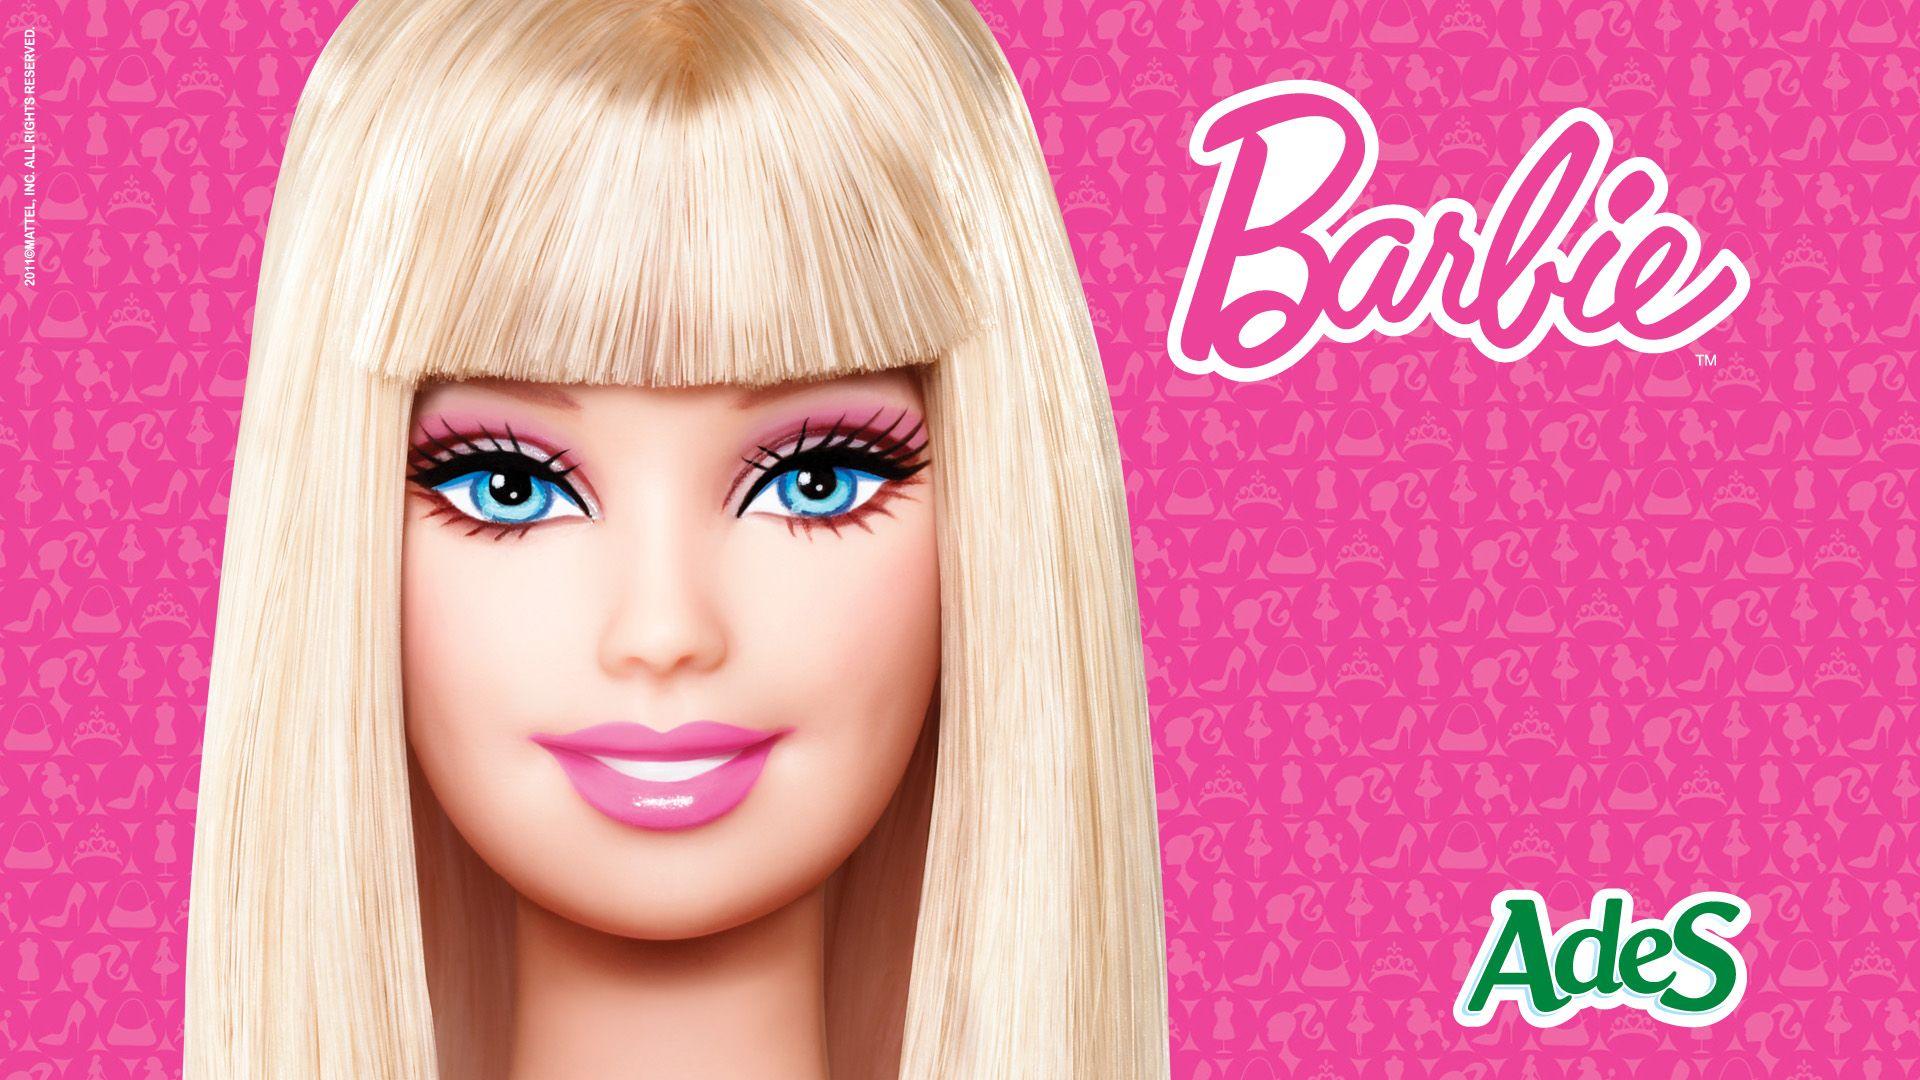 Barbie Movie Wallpapers Wallpaper Cave